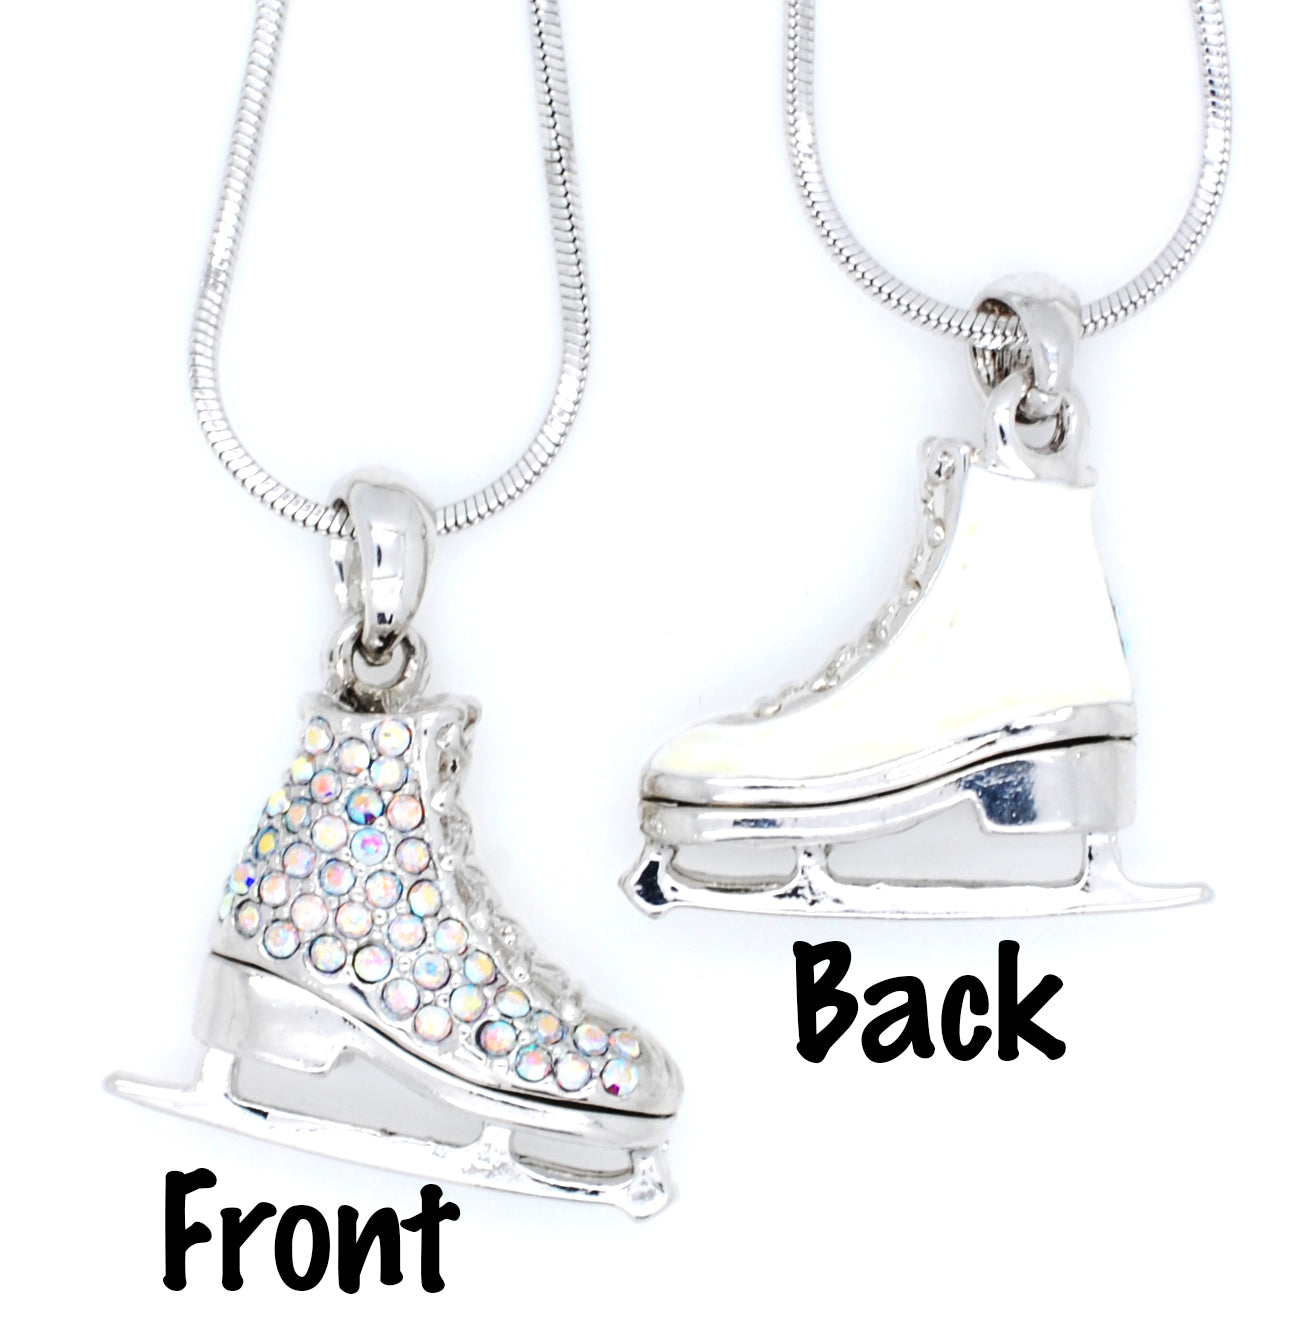 Deluxe Figure Skate Necklace - Enamel/Crystal